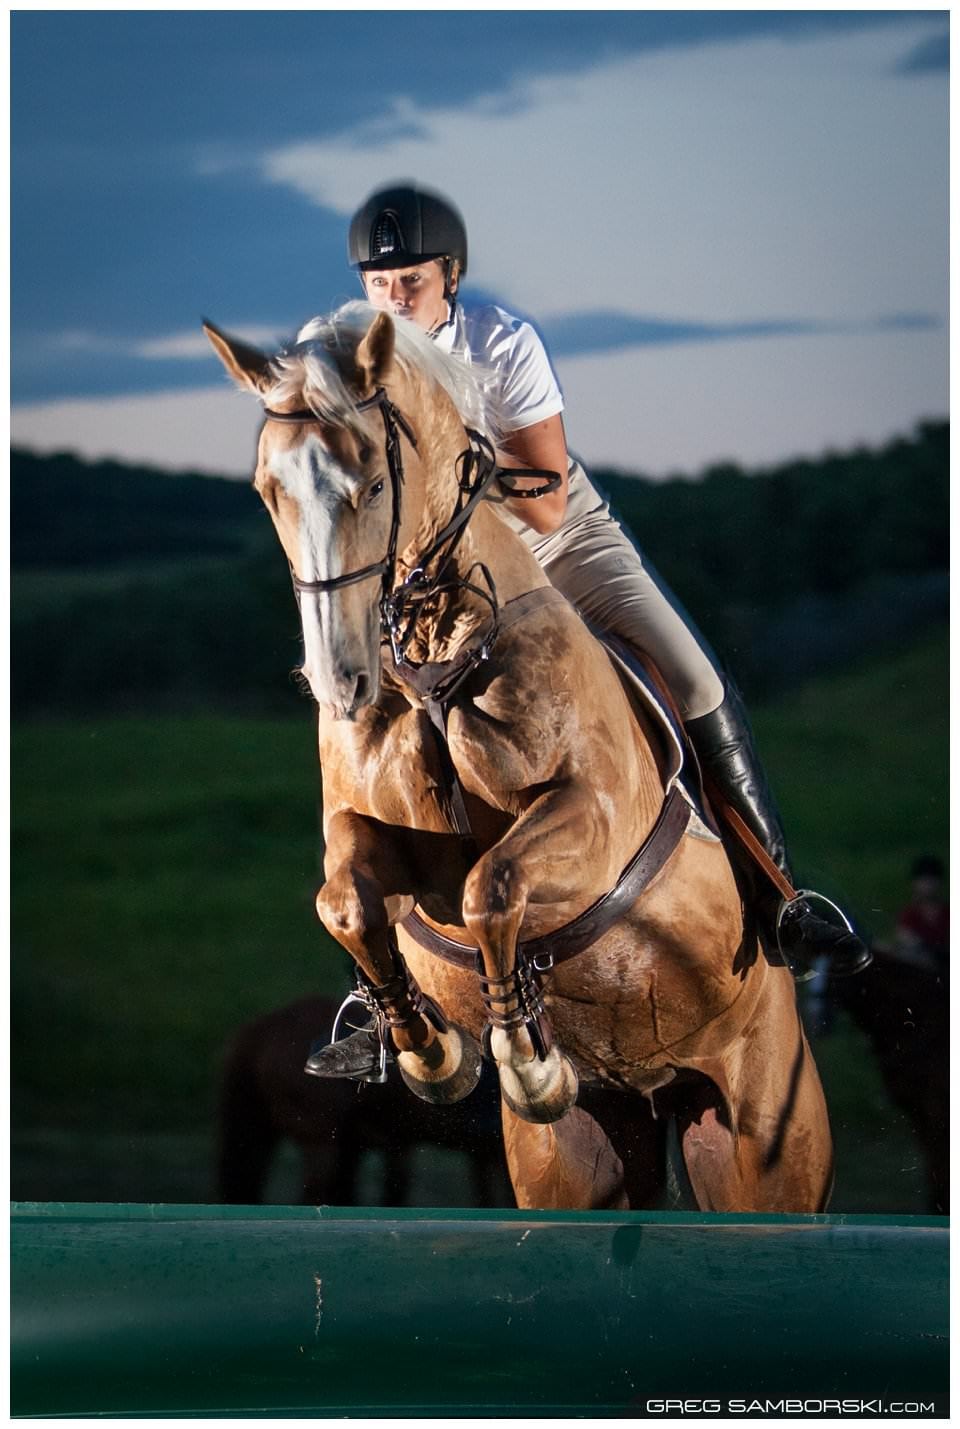 Calgary Equestrian Lifestyle Photographer